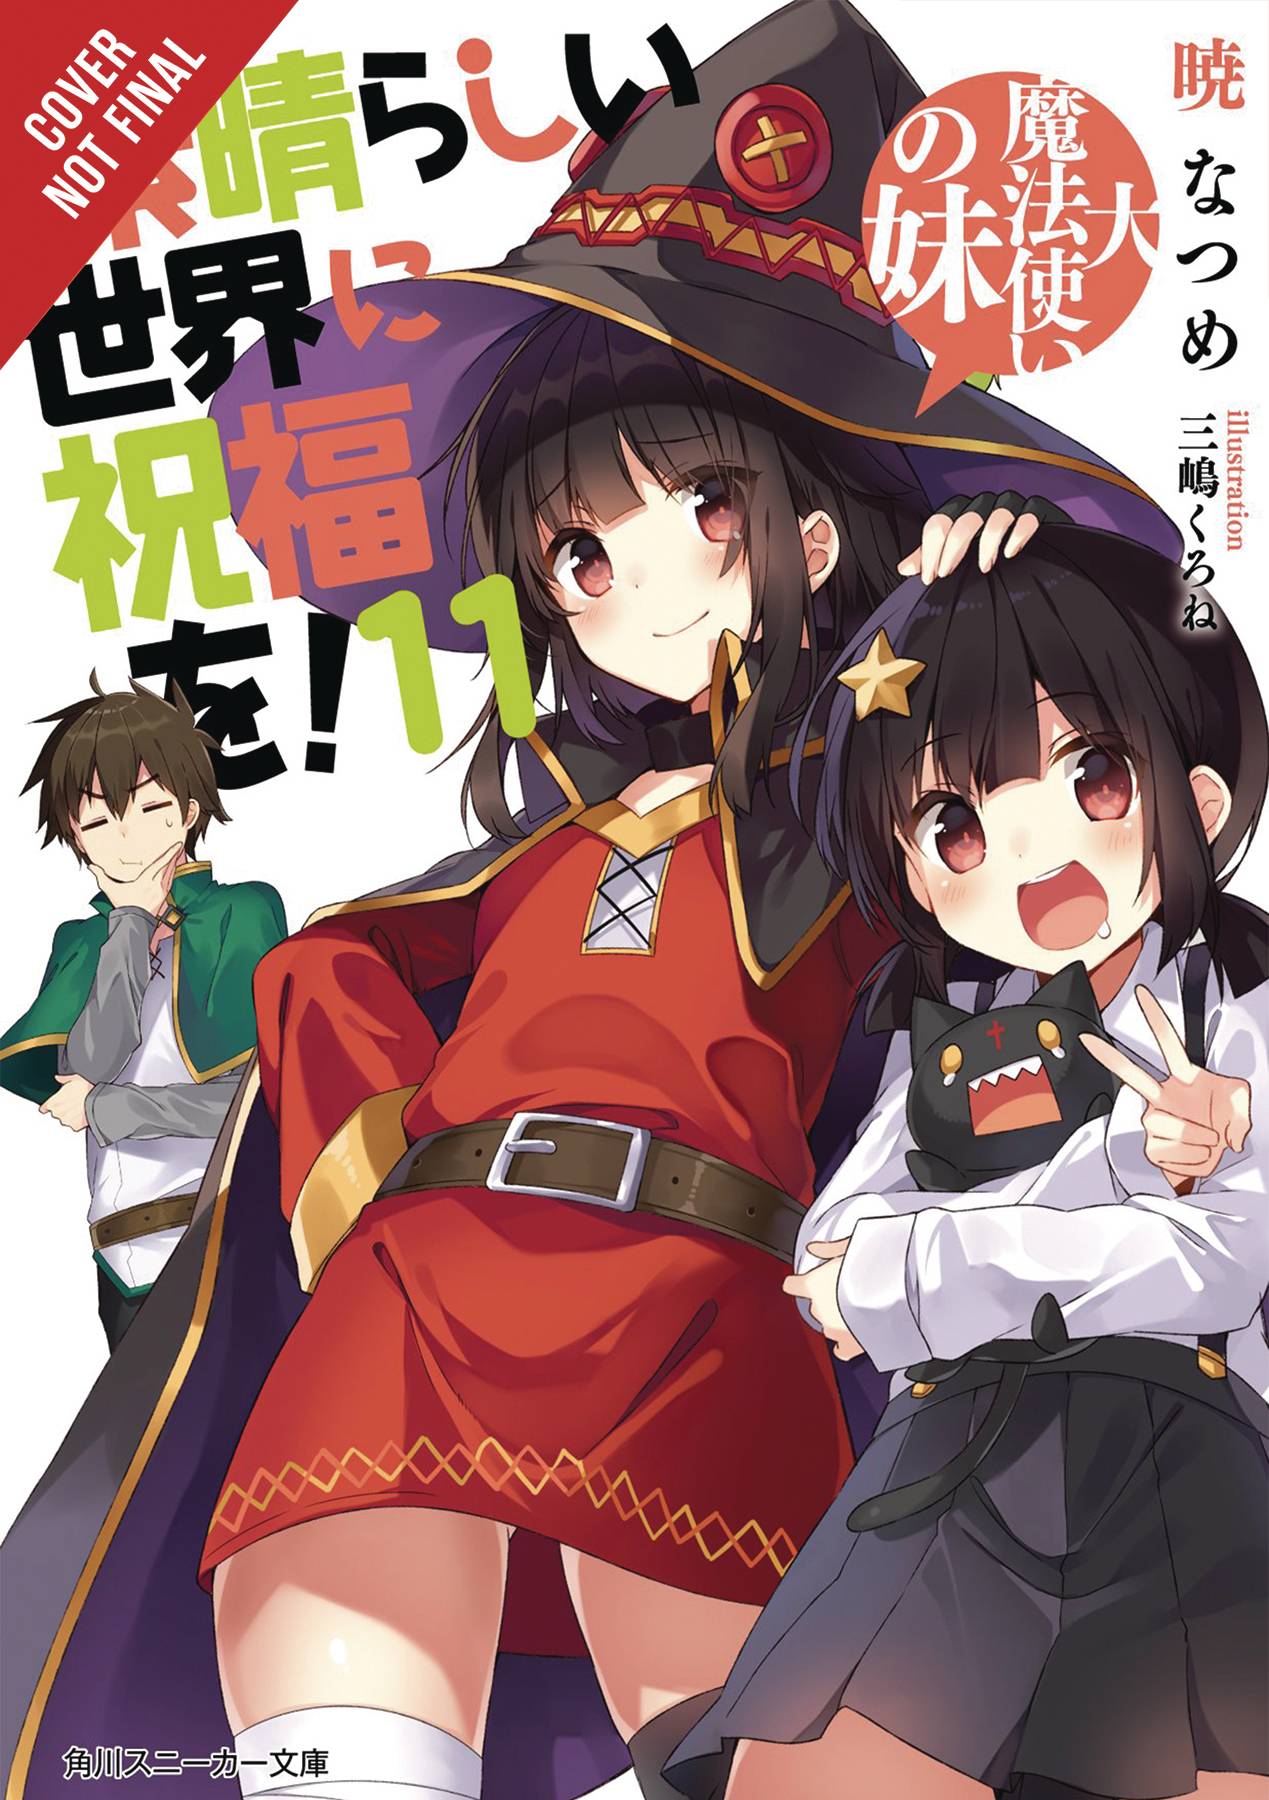 Feb202221 Konosuba Light Novel Sc Vol 11 Previews World